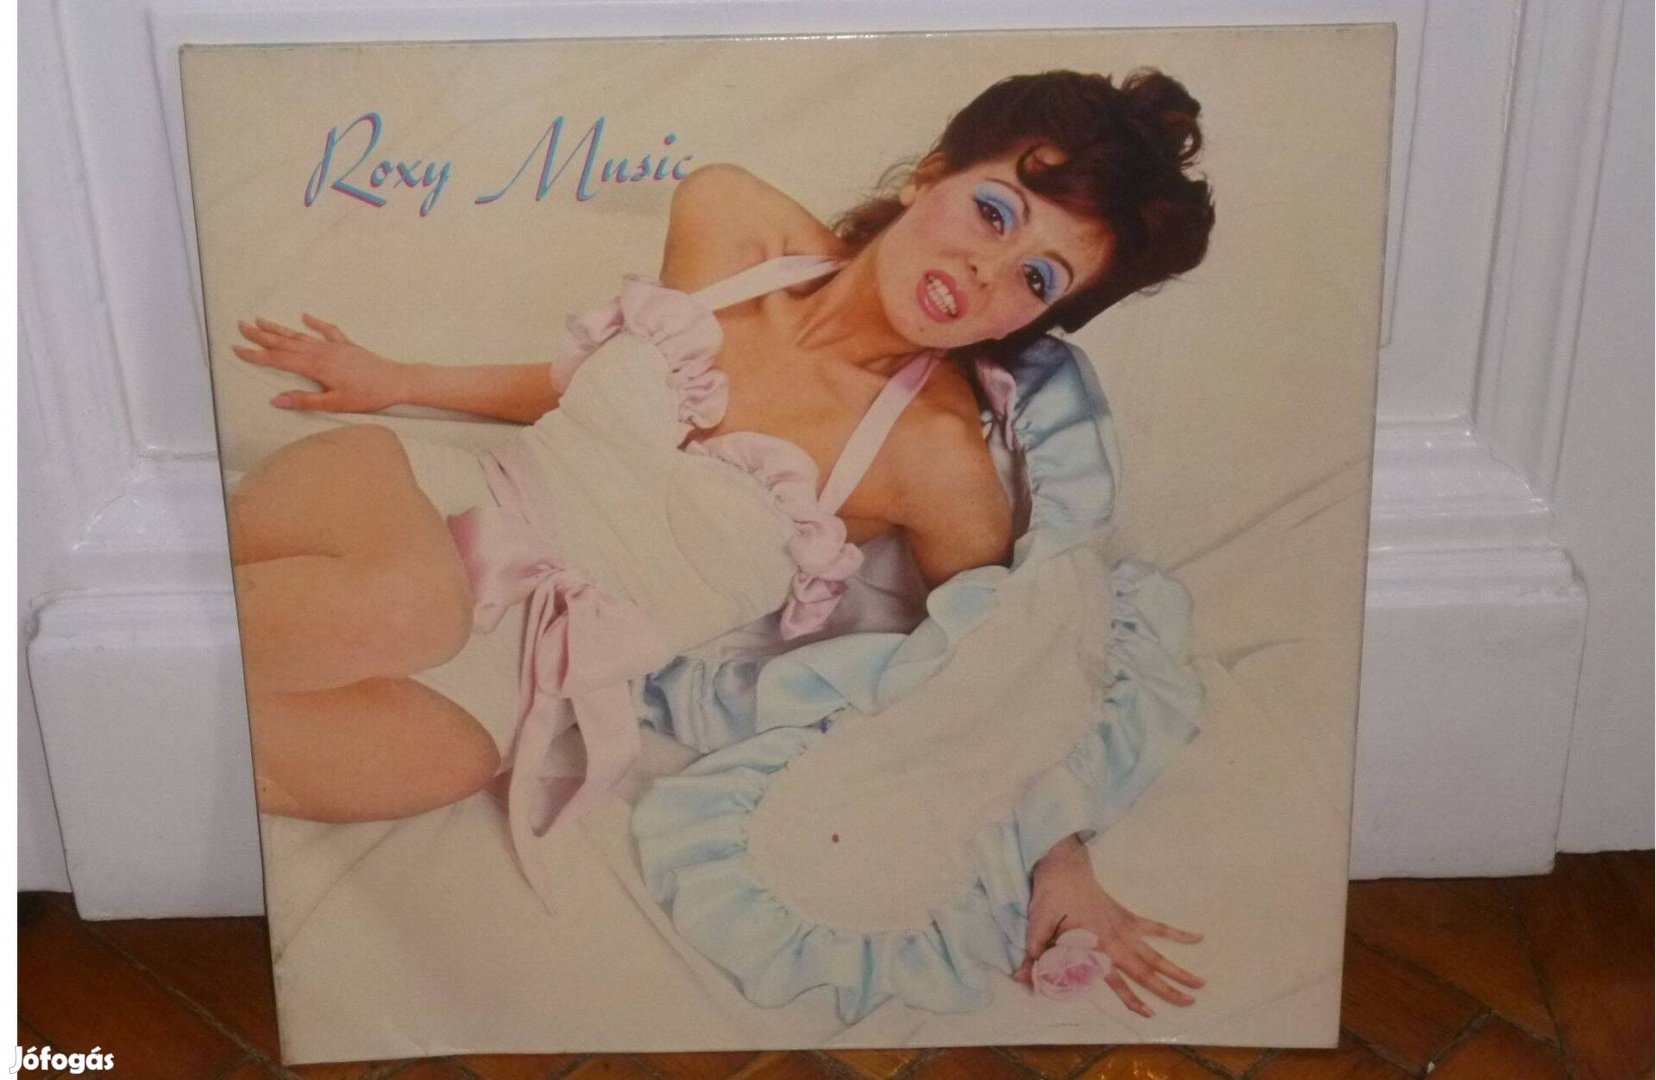 Roxy Music - Roxy Music LP 1972 Germany Gatefold